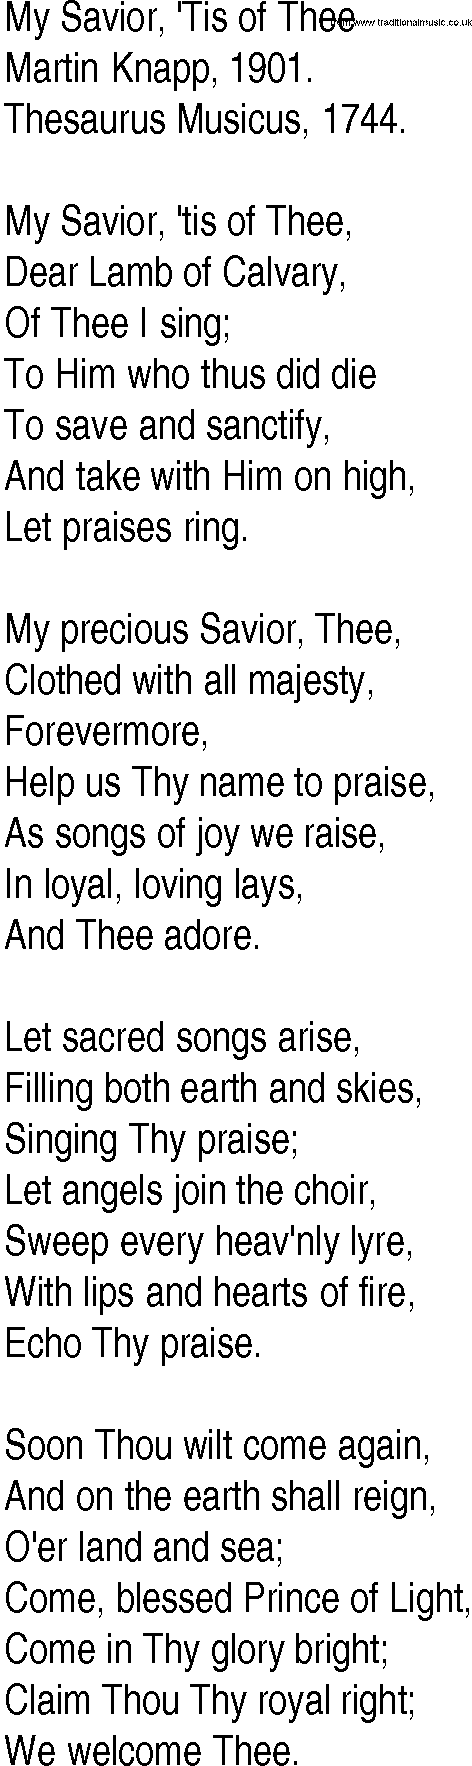 Hymn and Gospel Song: My Savior, 'Tis of Thee by Martin Knapp lyrics